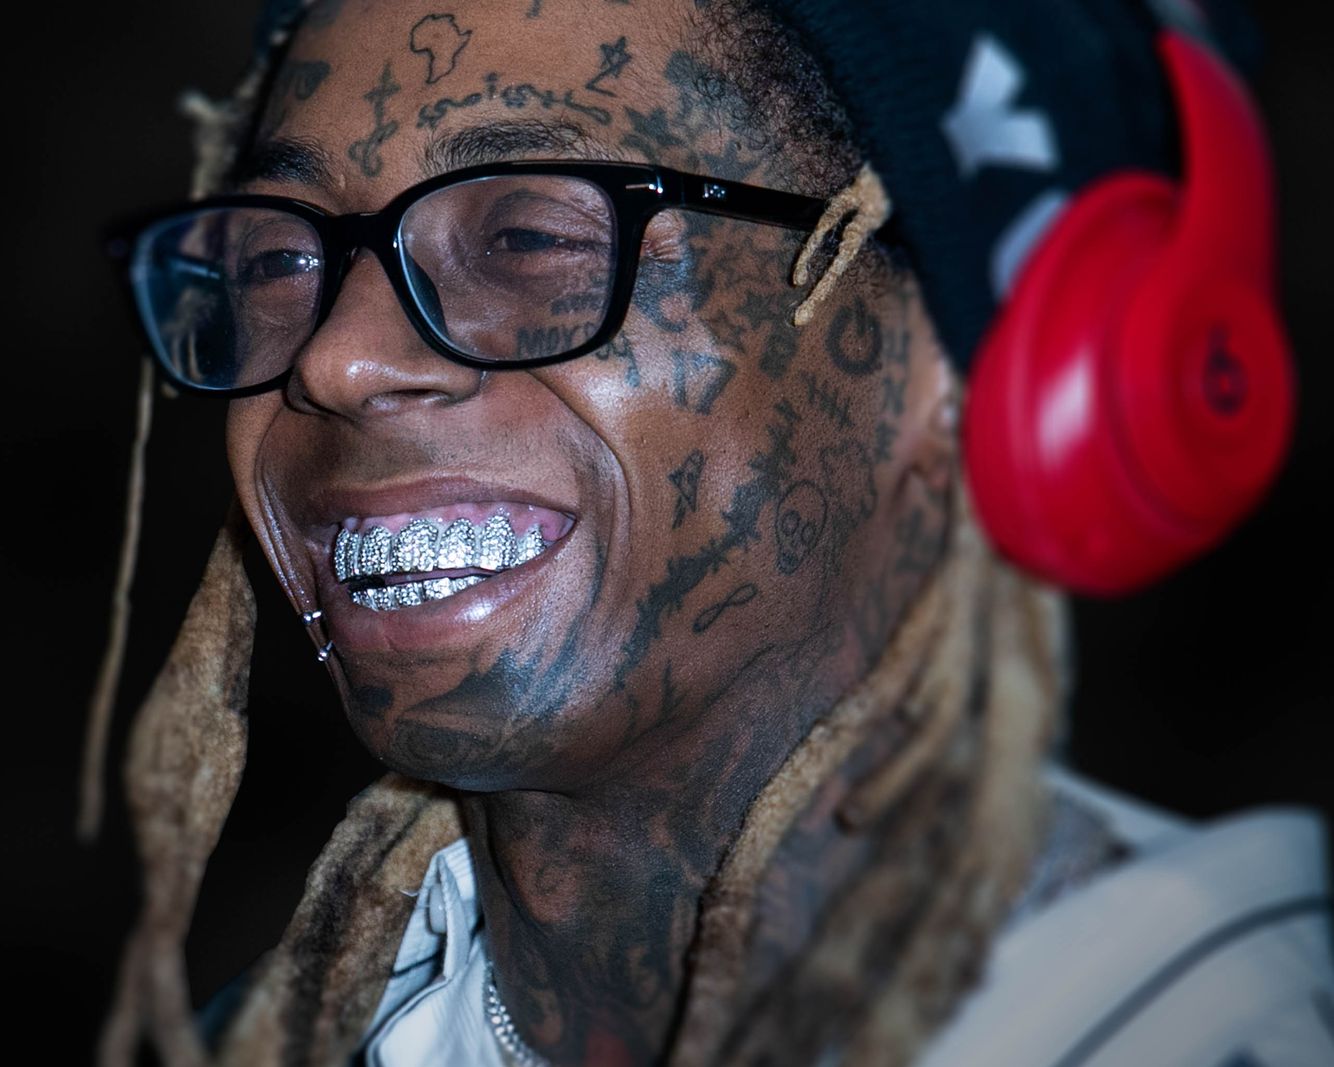 Lil Wayne By Chicago Celebrity Entertainment Event Photographer Jeff Schear